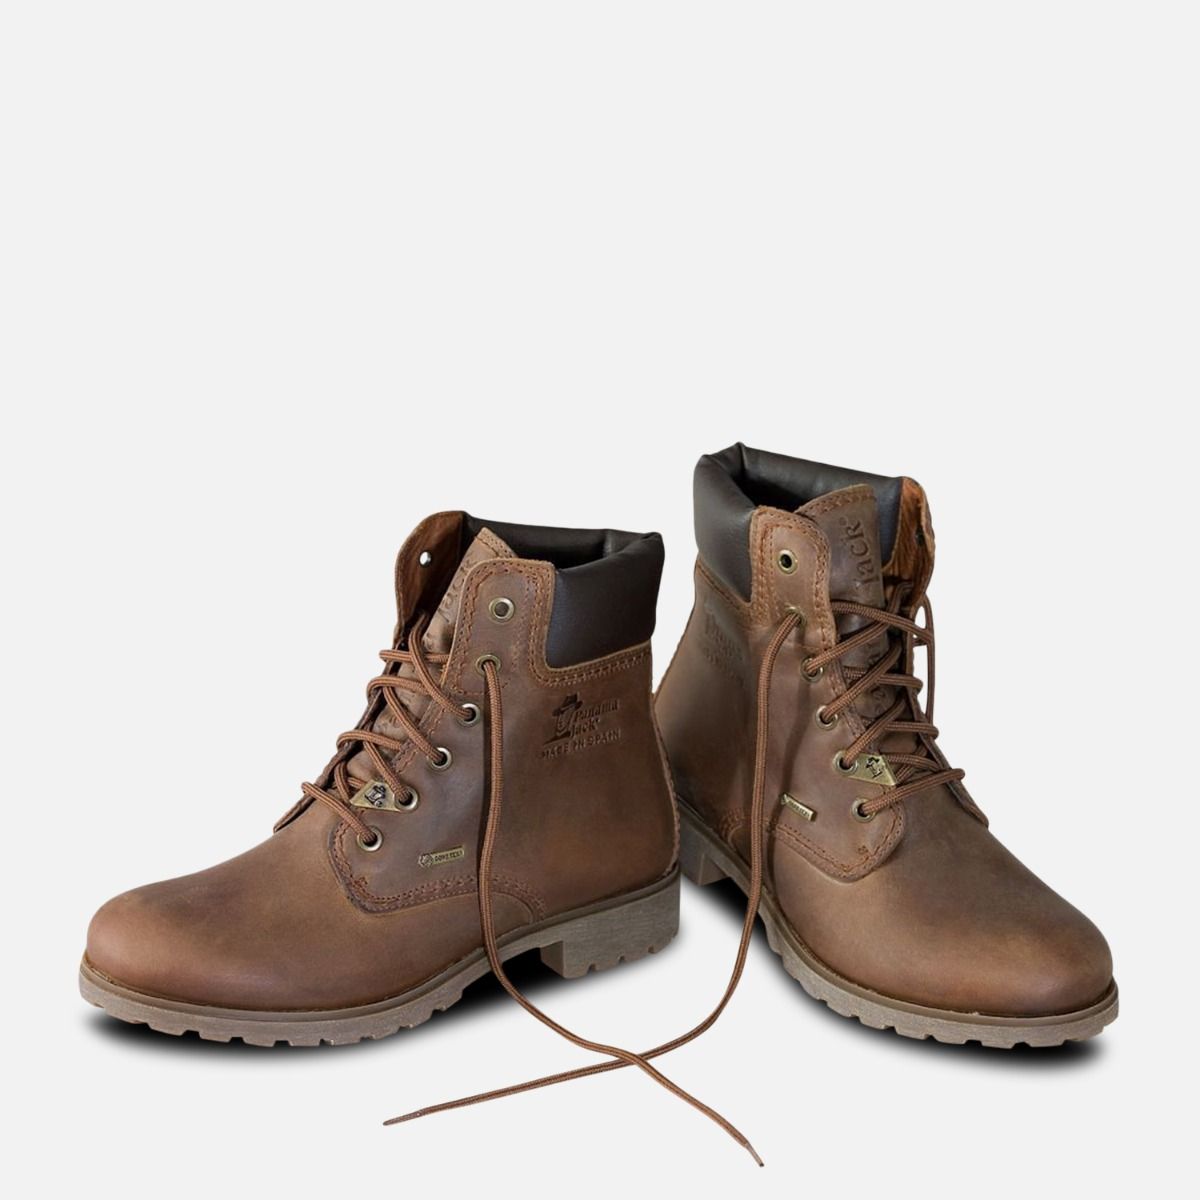 discount 68% Brown 40                  EU WOMEN FASHION Footwear Waterproof Boots California Dark brown wellies 